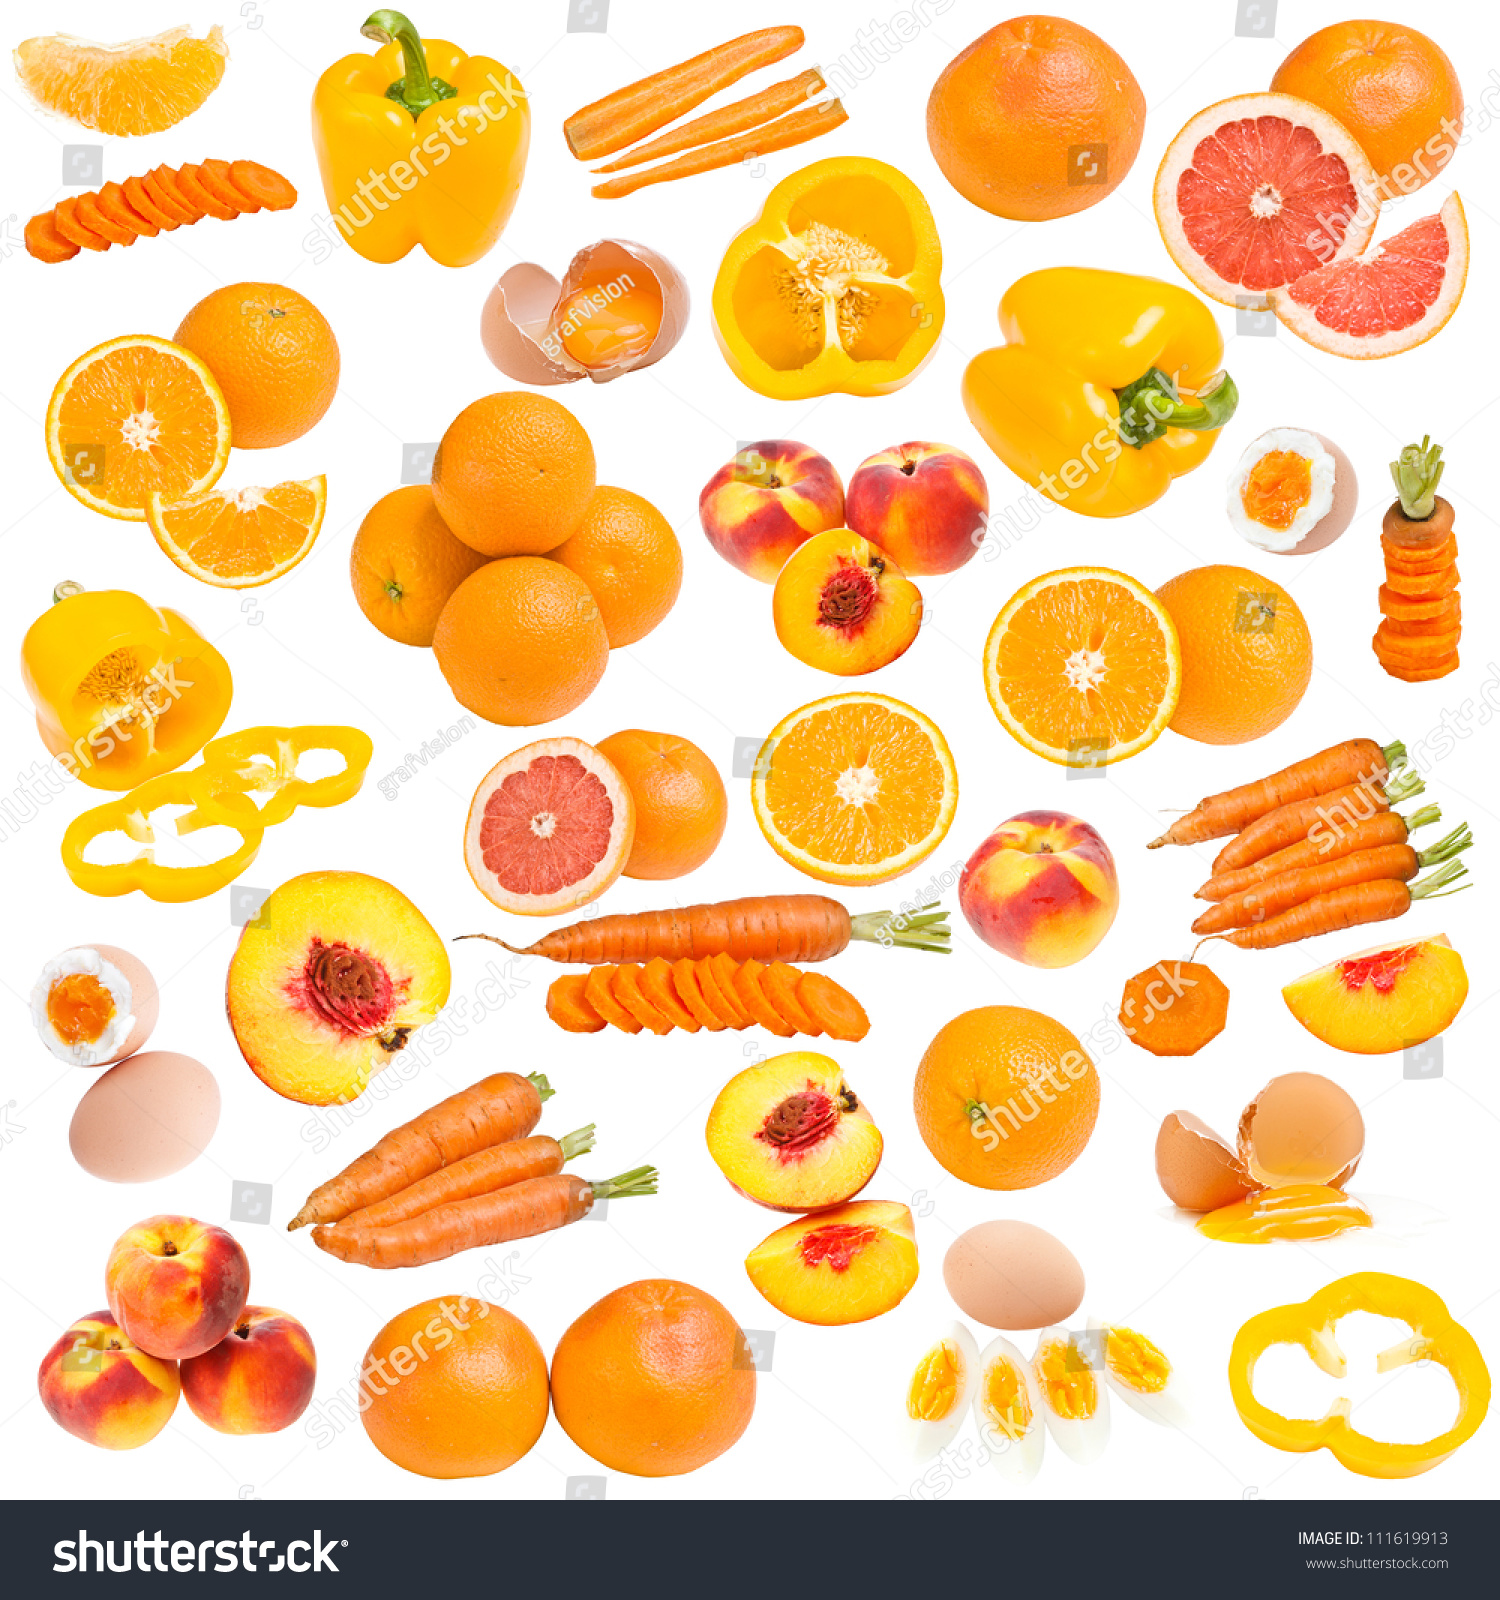 Orange collection